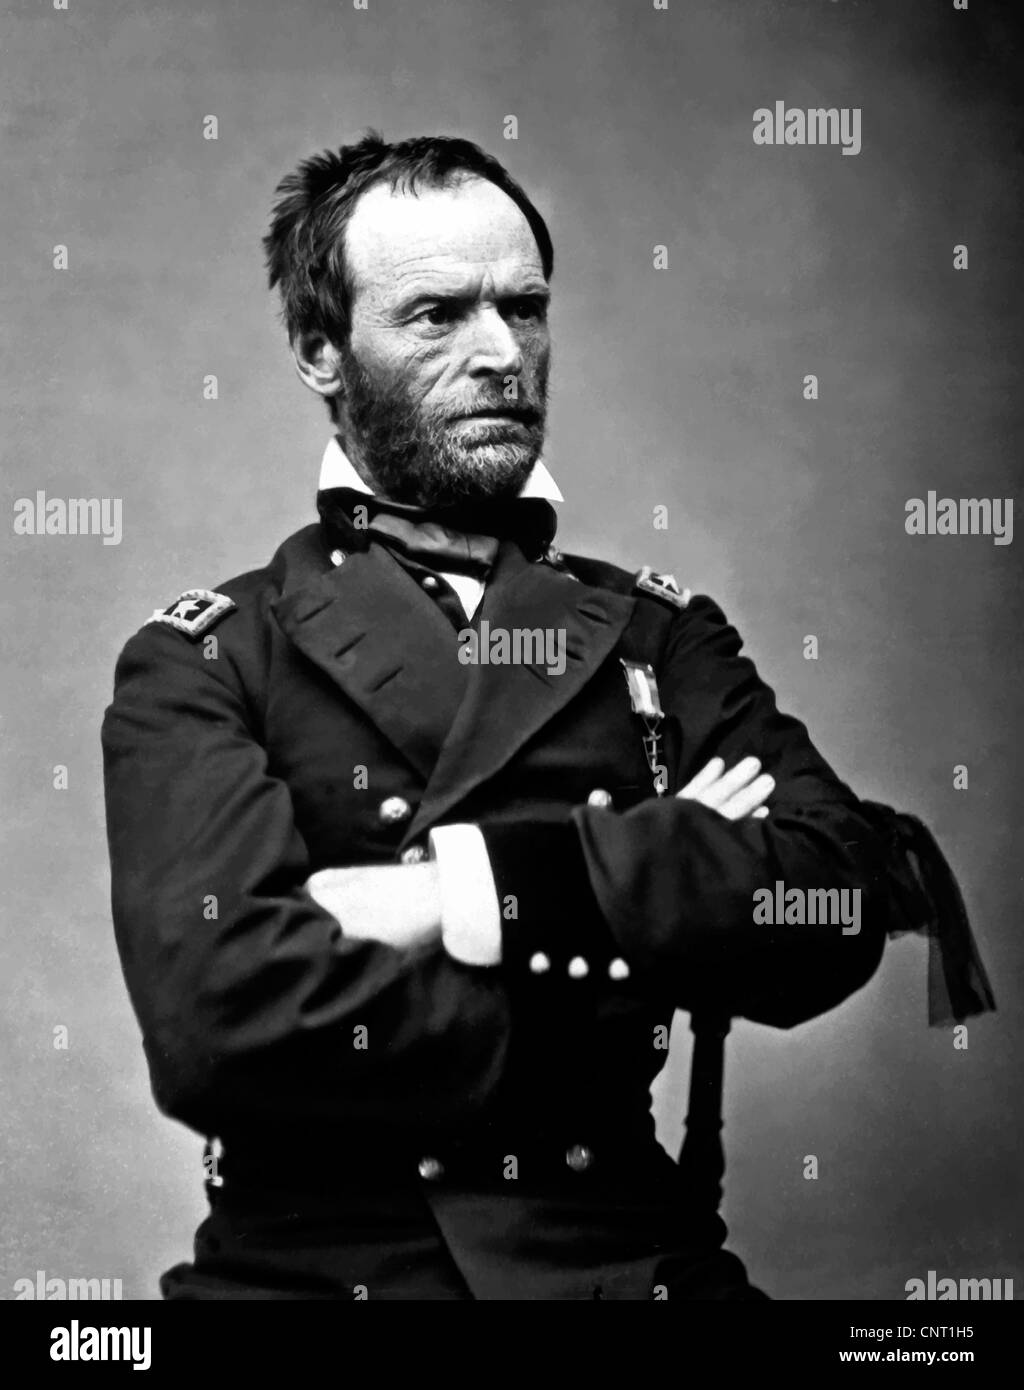 Digitally restored vector portrait of General William Tecumseh Sherman, an American Civil War hero. Stock Photo